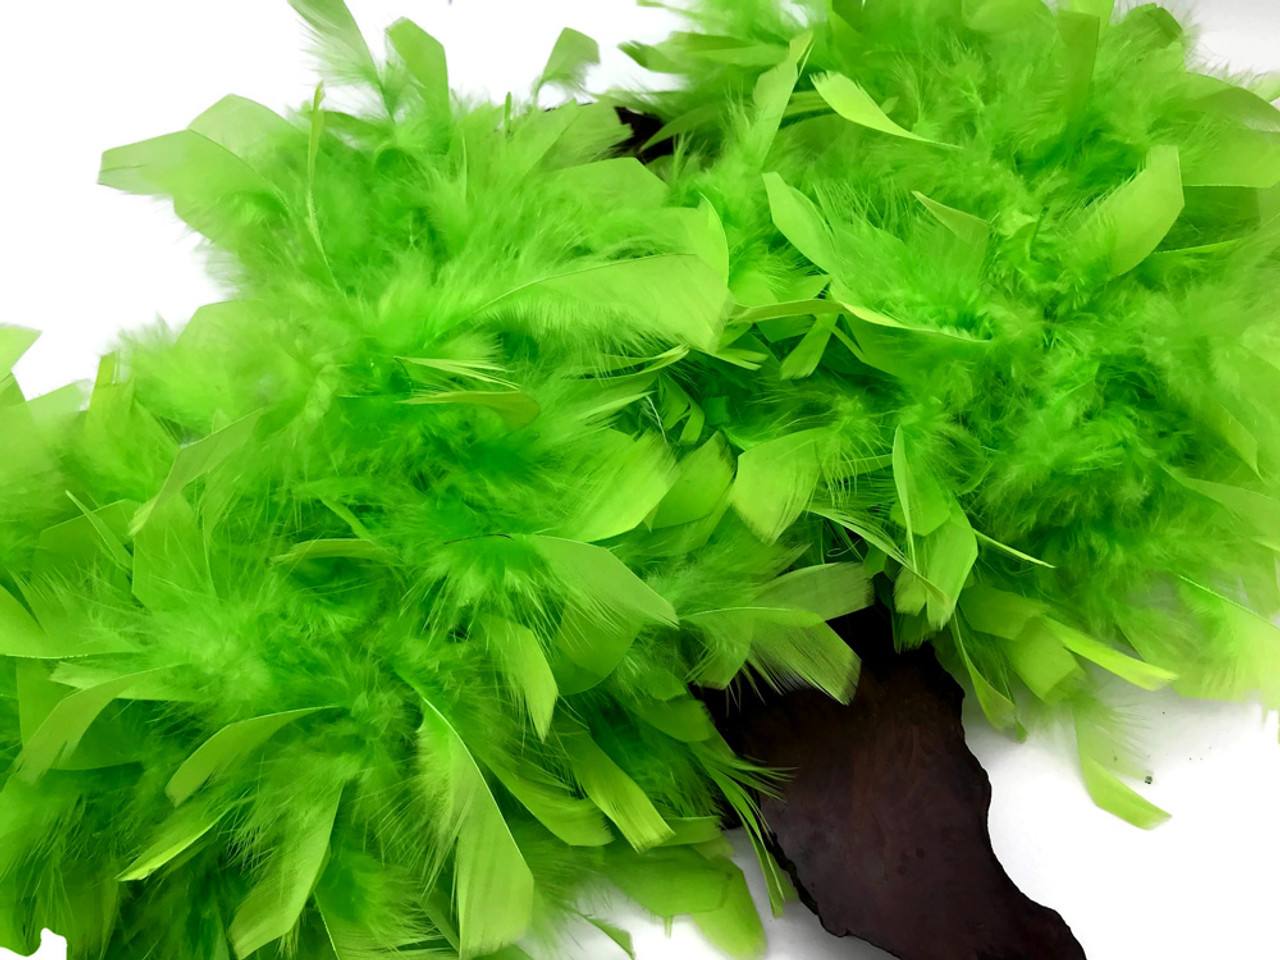 Skinny Marabou Feather Boa - 2 Yards - Lime Green 